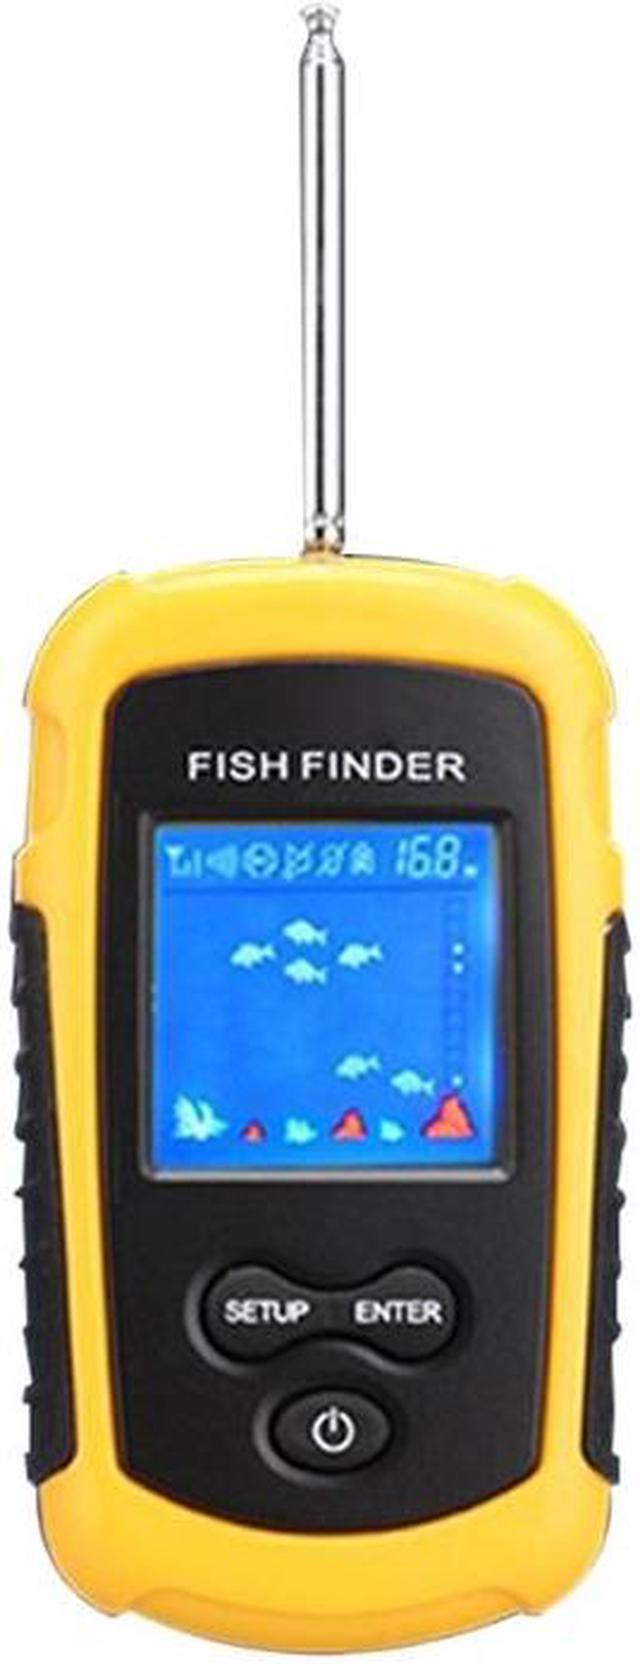 Sonar Fish Finder Boat Depth Fishing Fish Finders Waterproof Handheld  Wireless Fishing Finder Transducer Depth Finder 